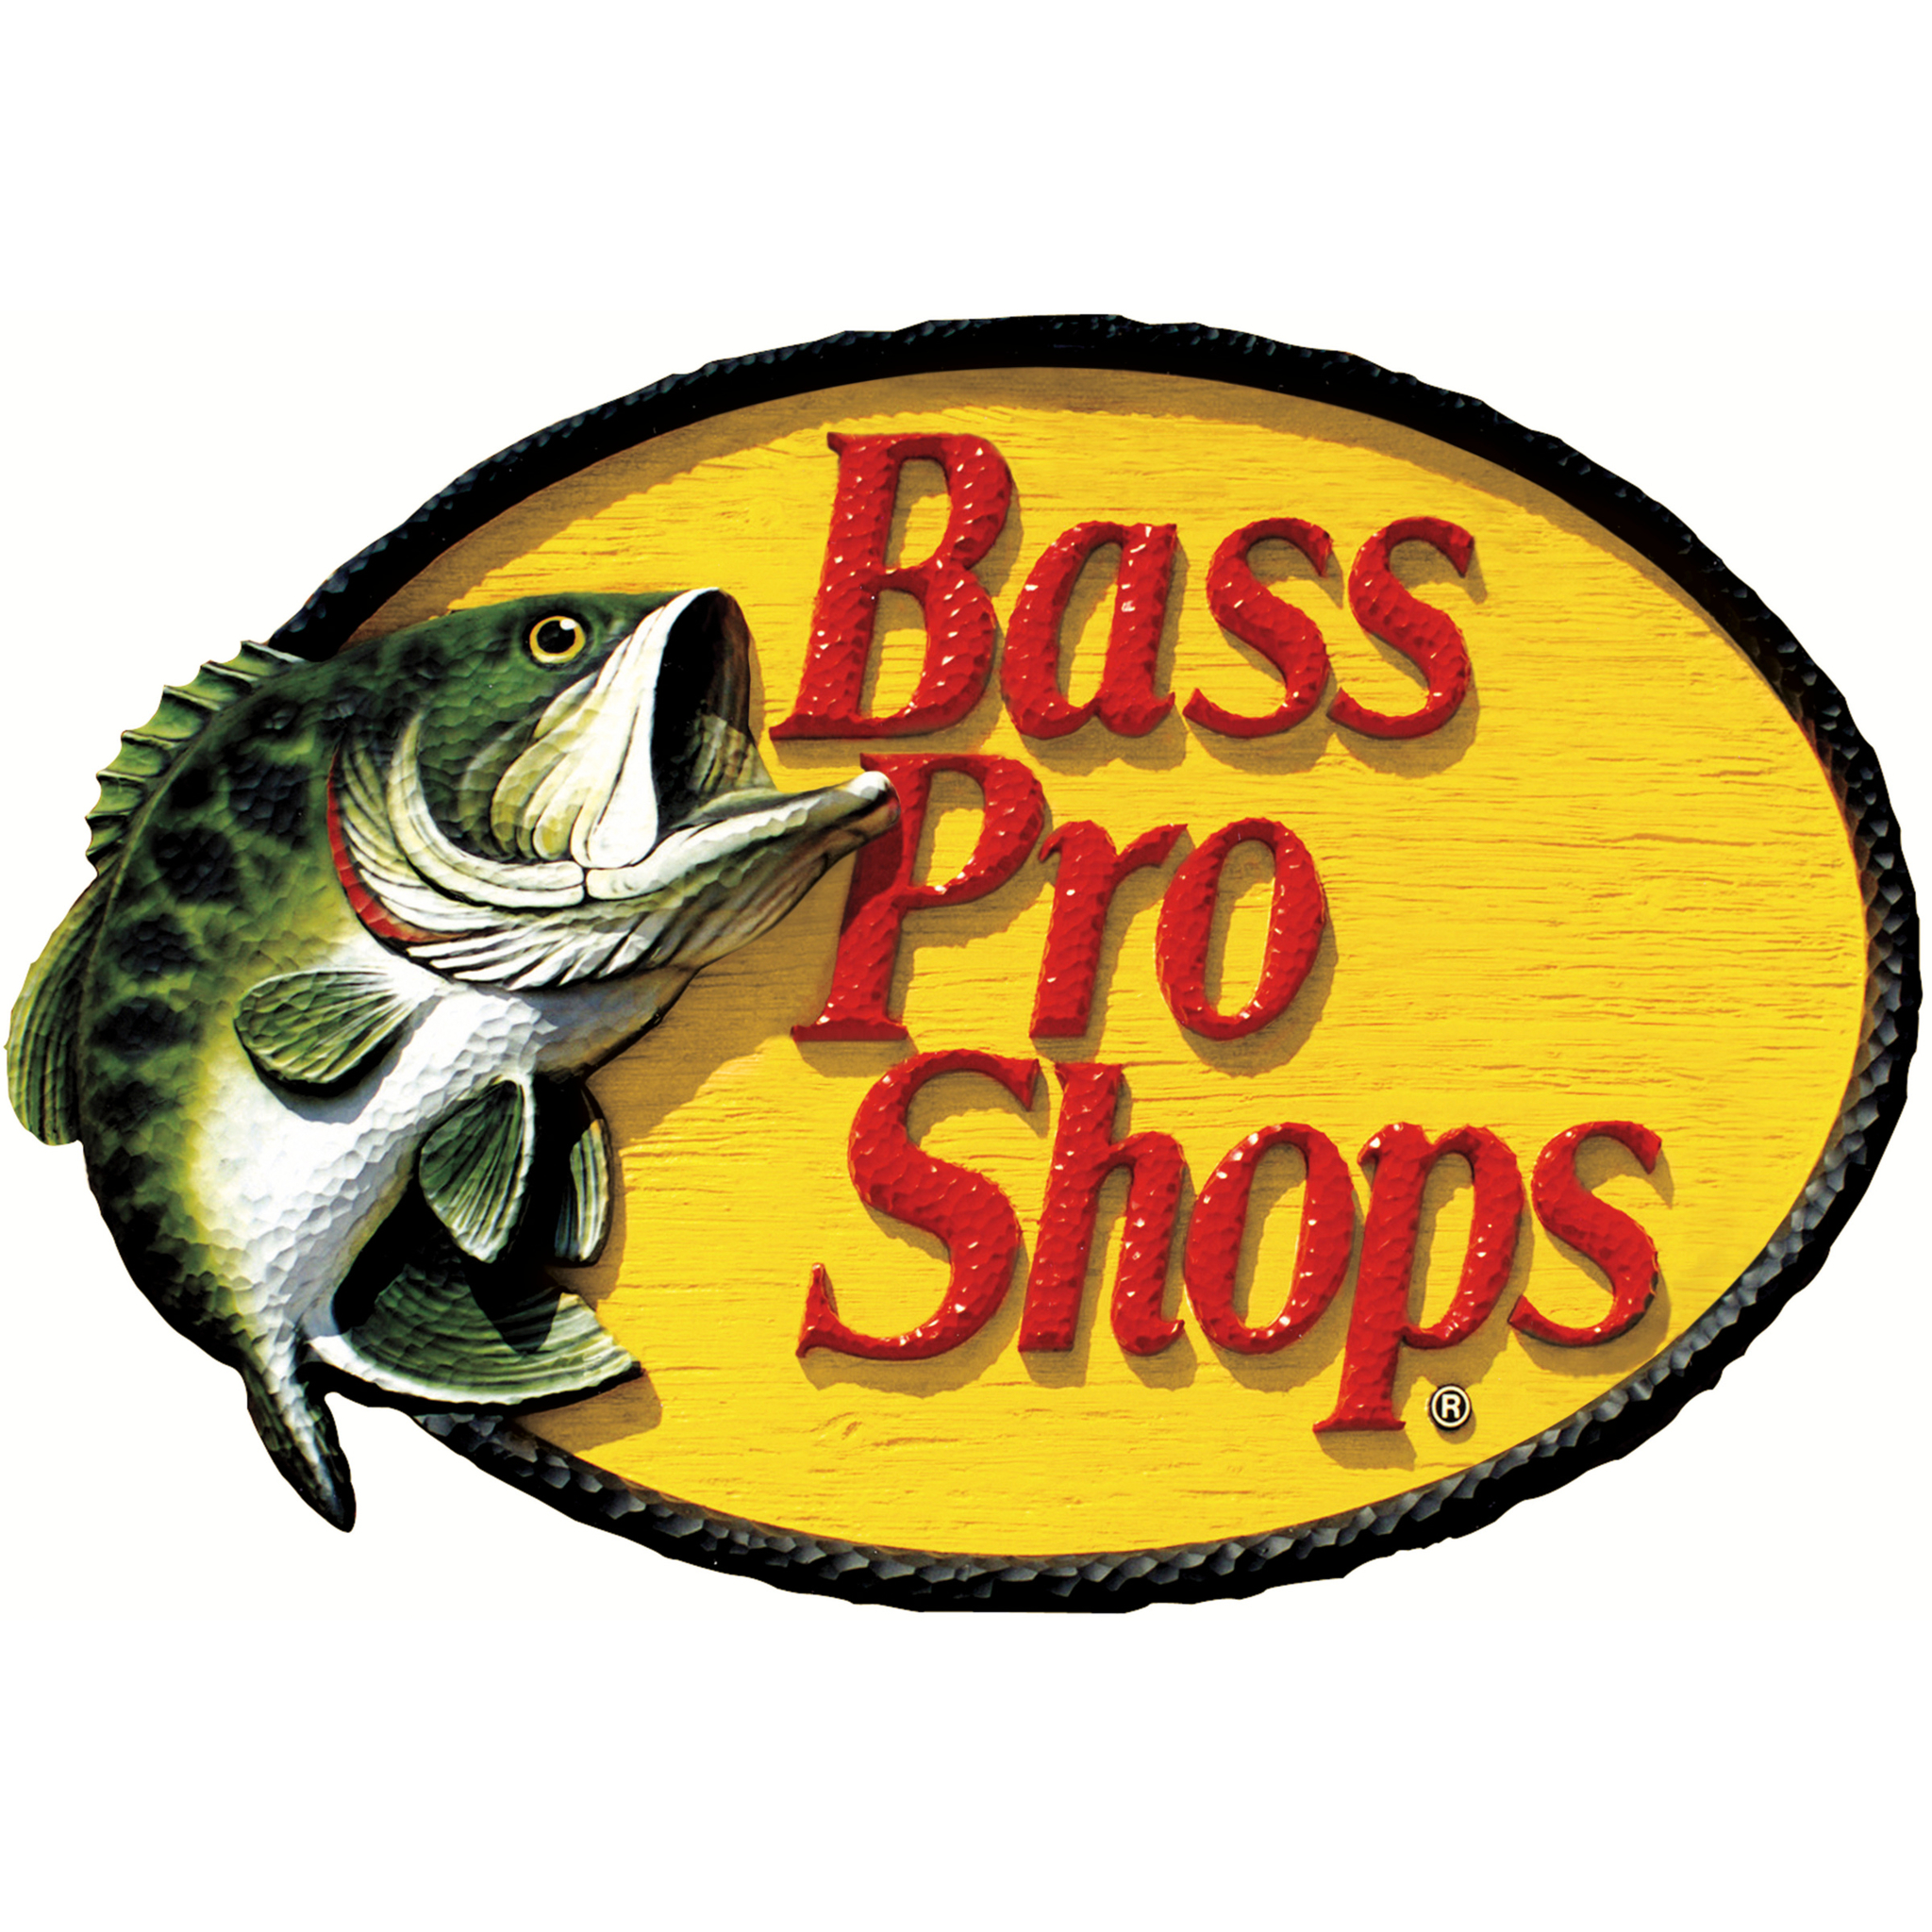 Bass Pro Shops - Magasins d'articles de sport